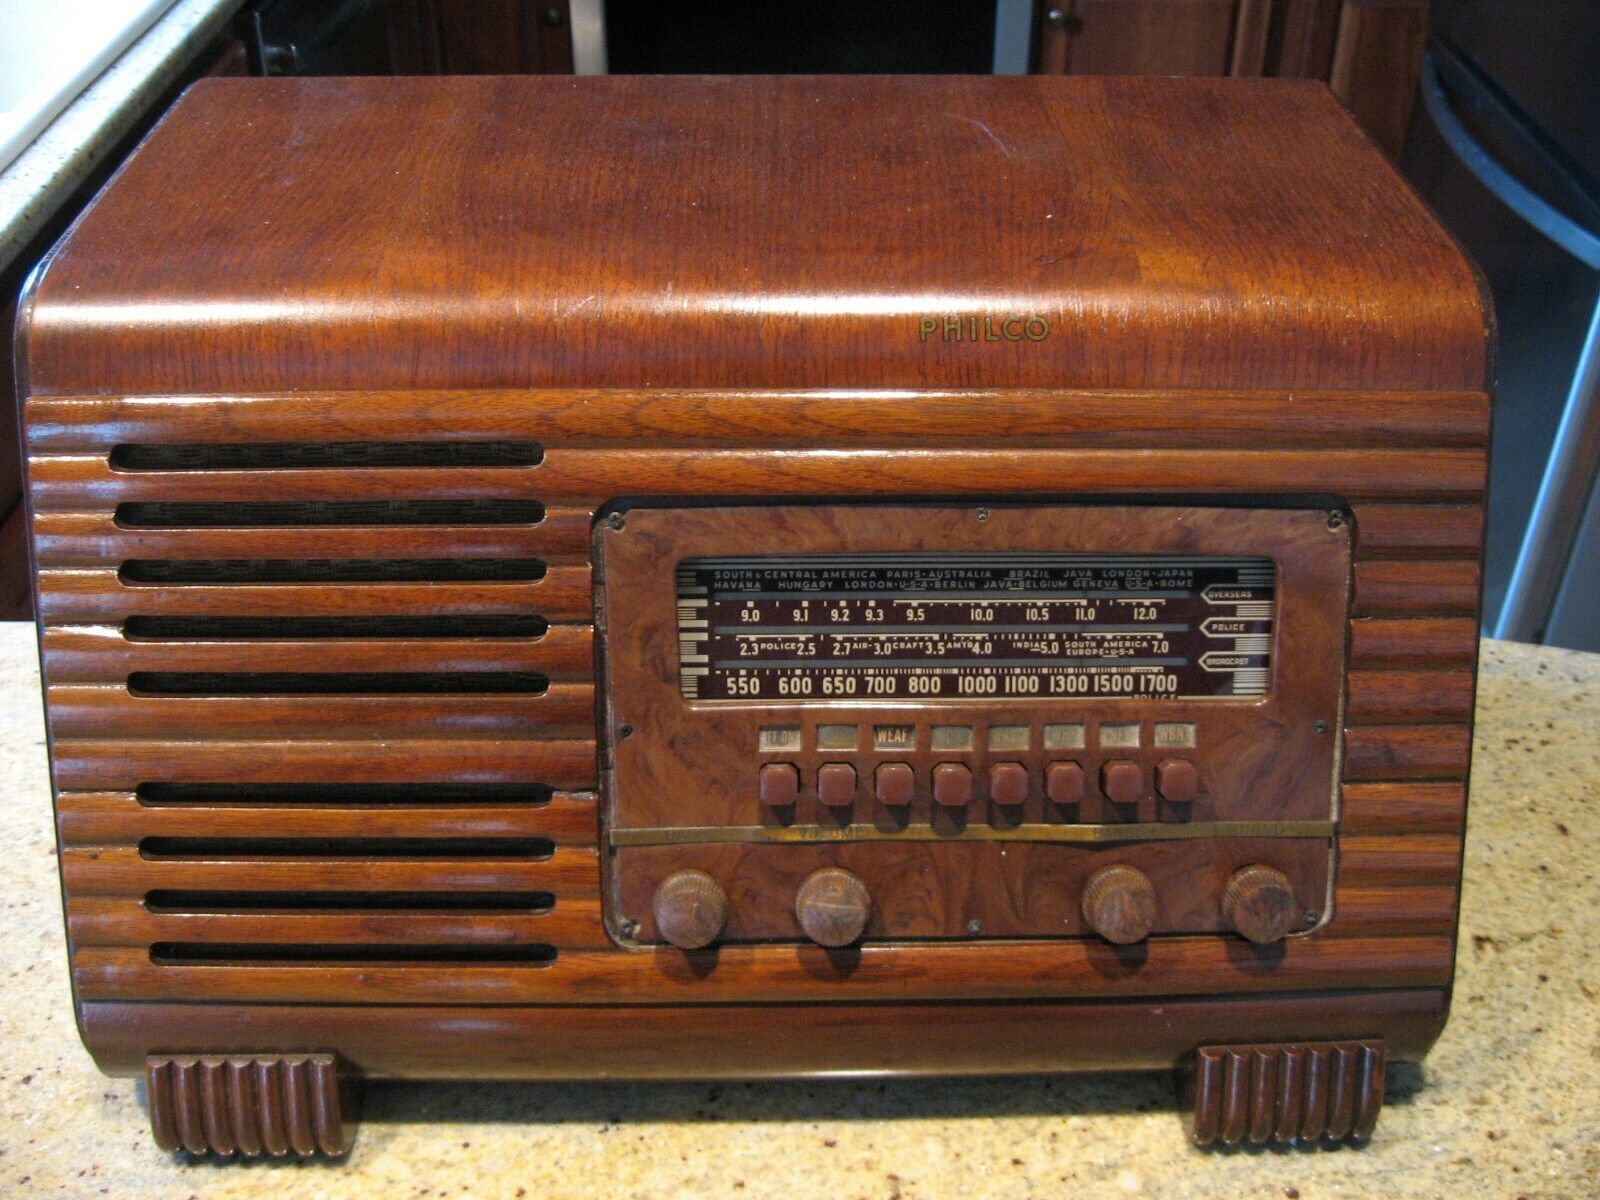 1941 Philco 3-band Model 41-250 tube radio..fully restored